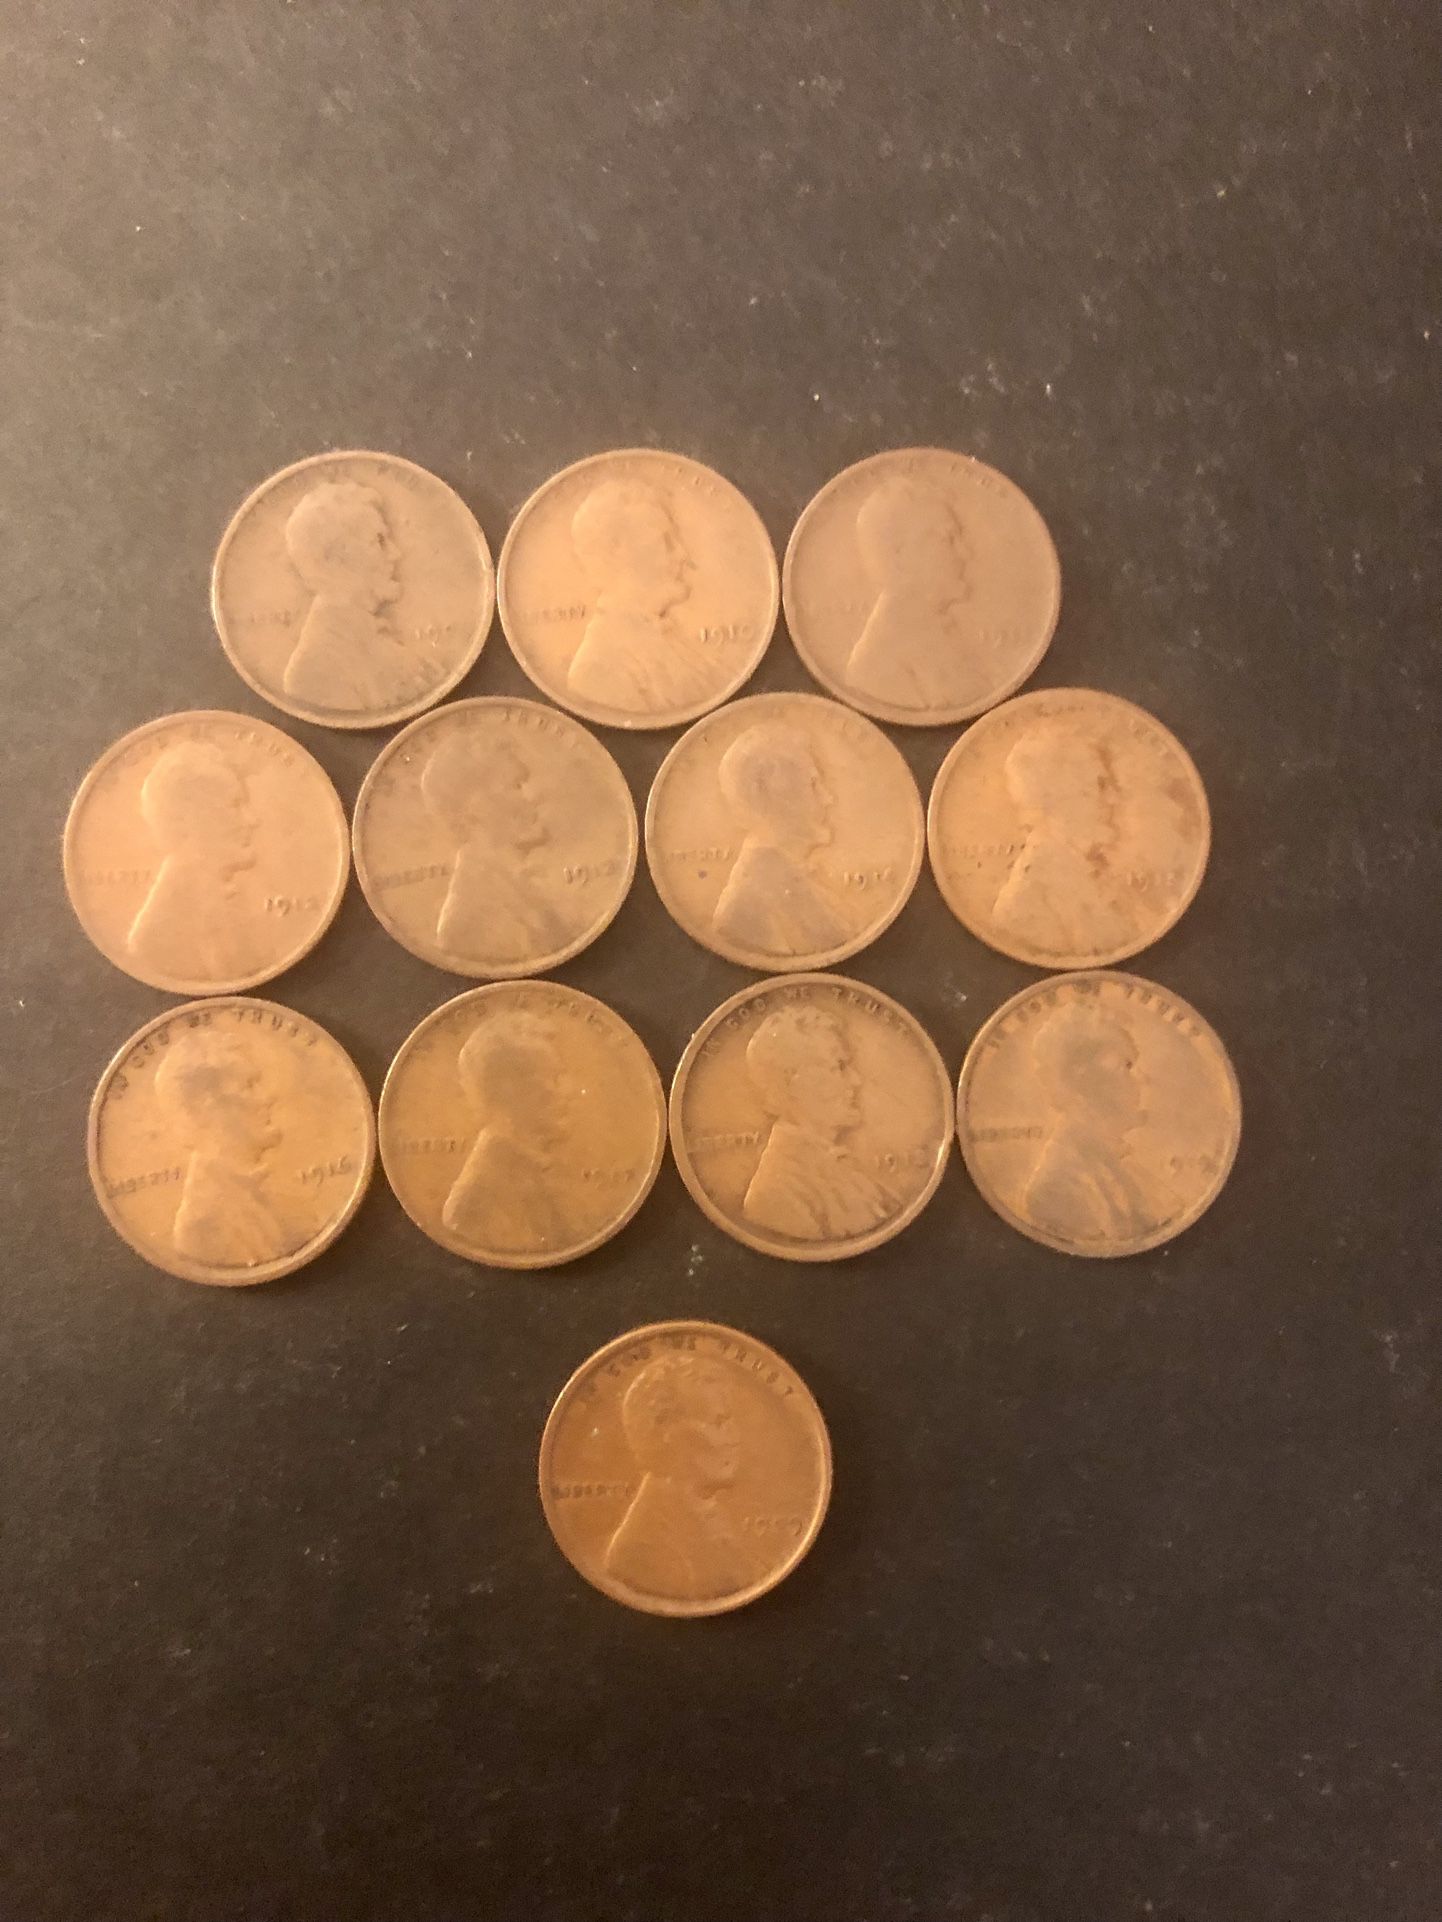 Coins - 1909VDB and 1909P thru 1919P - total 12 coins 